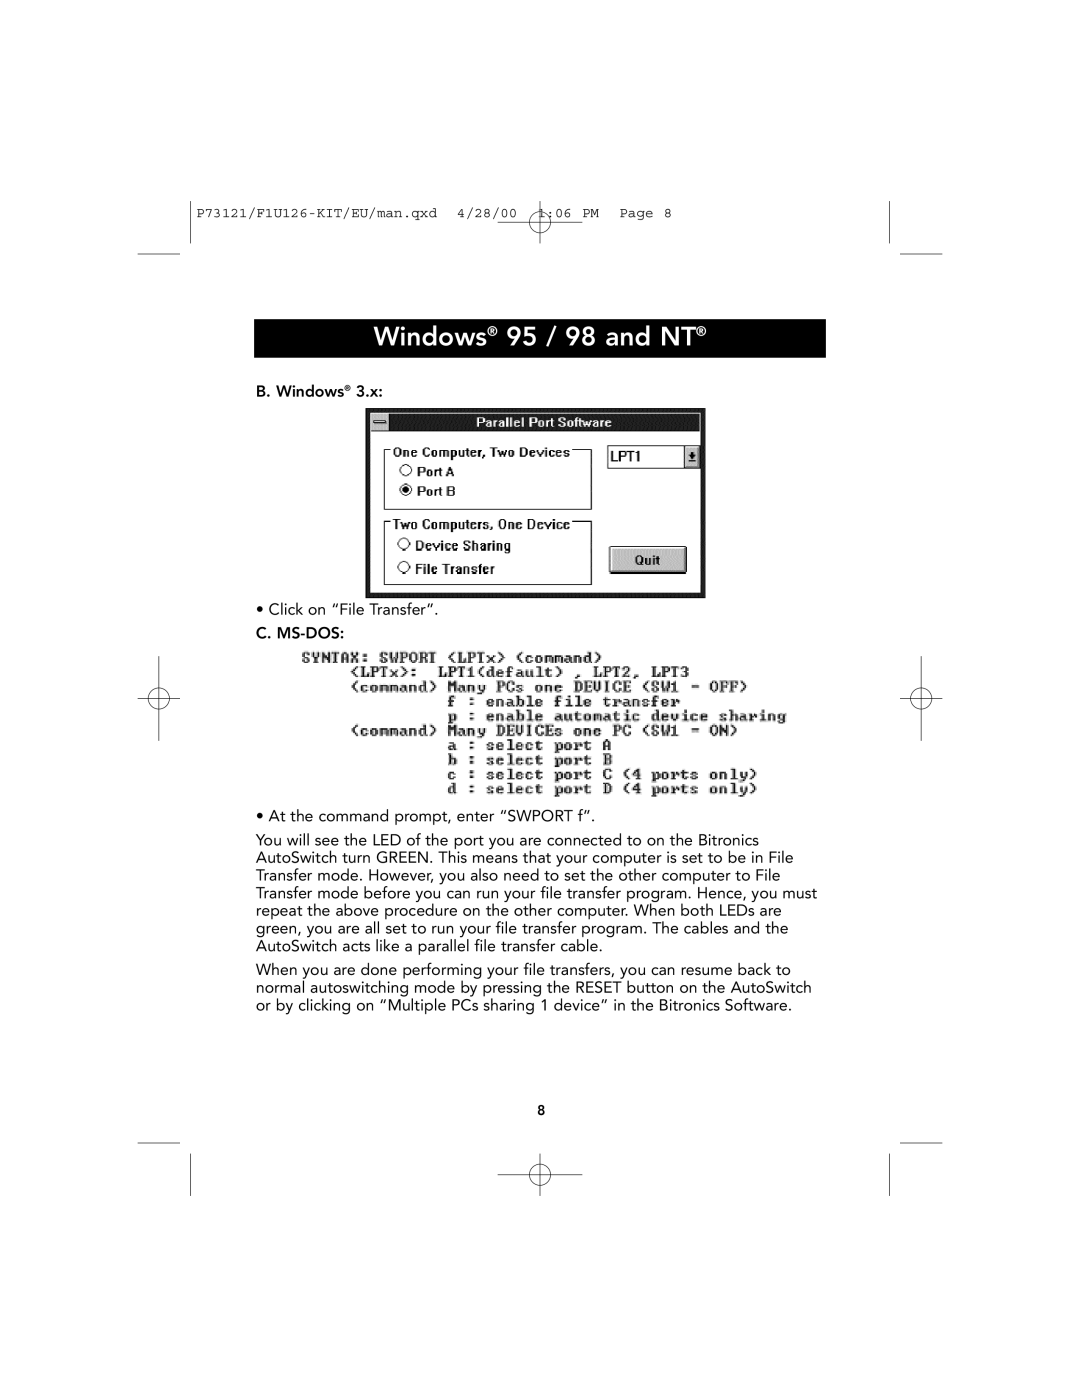 Belkin P73121, F1U126-KIT user manual Windows 95 / 98 and NT 